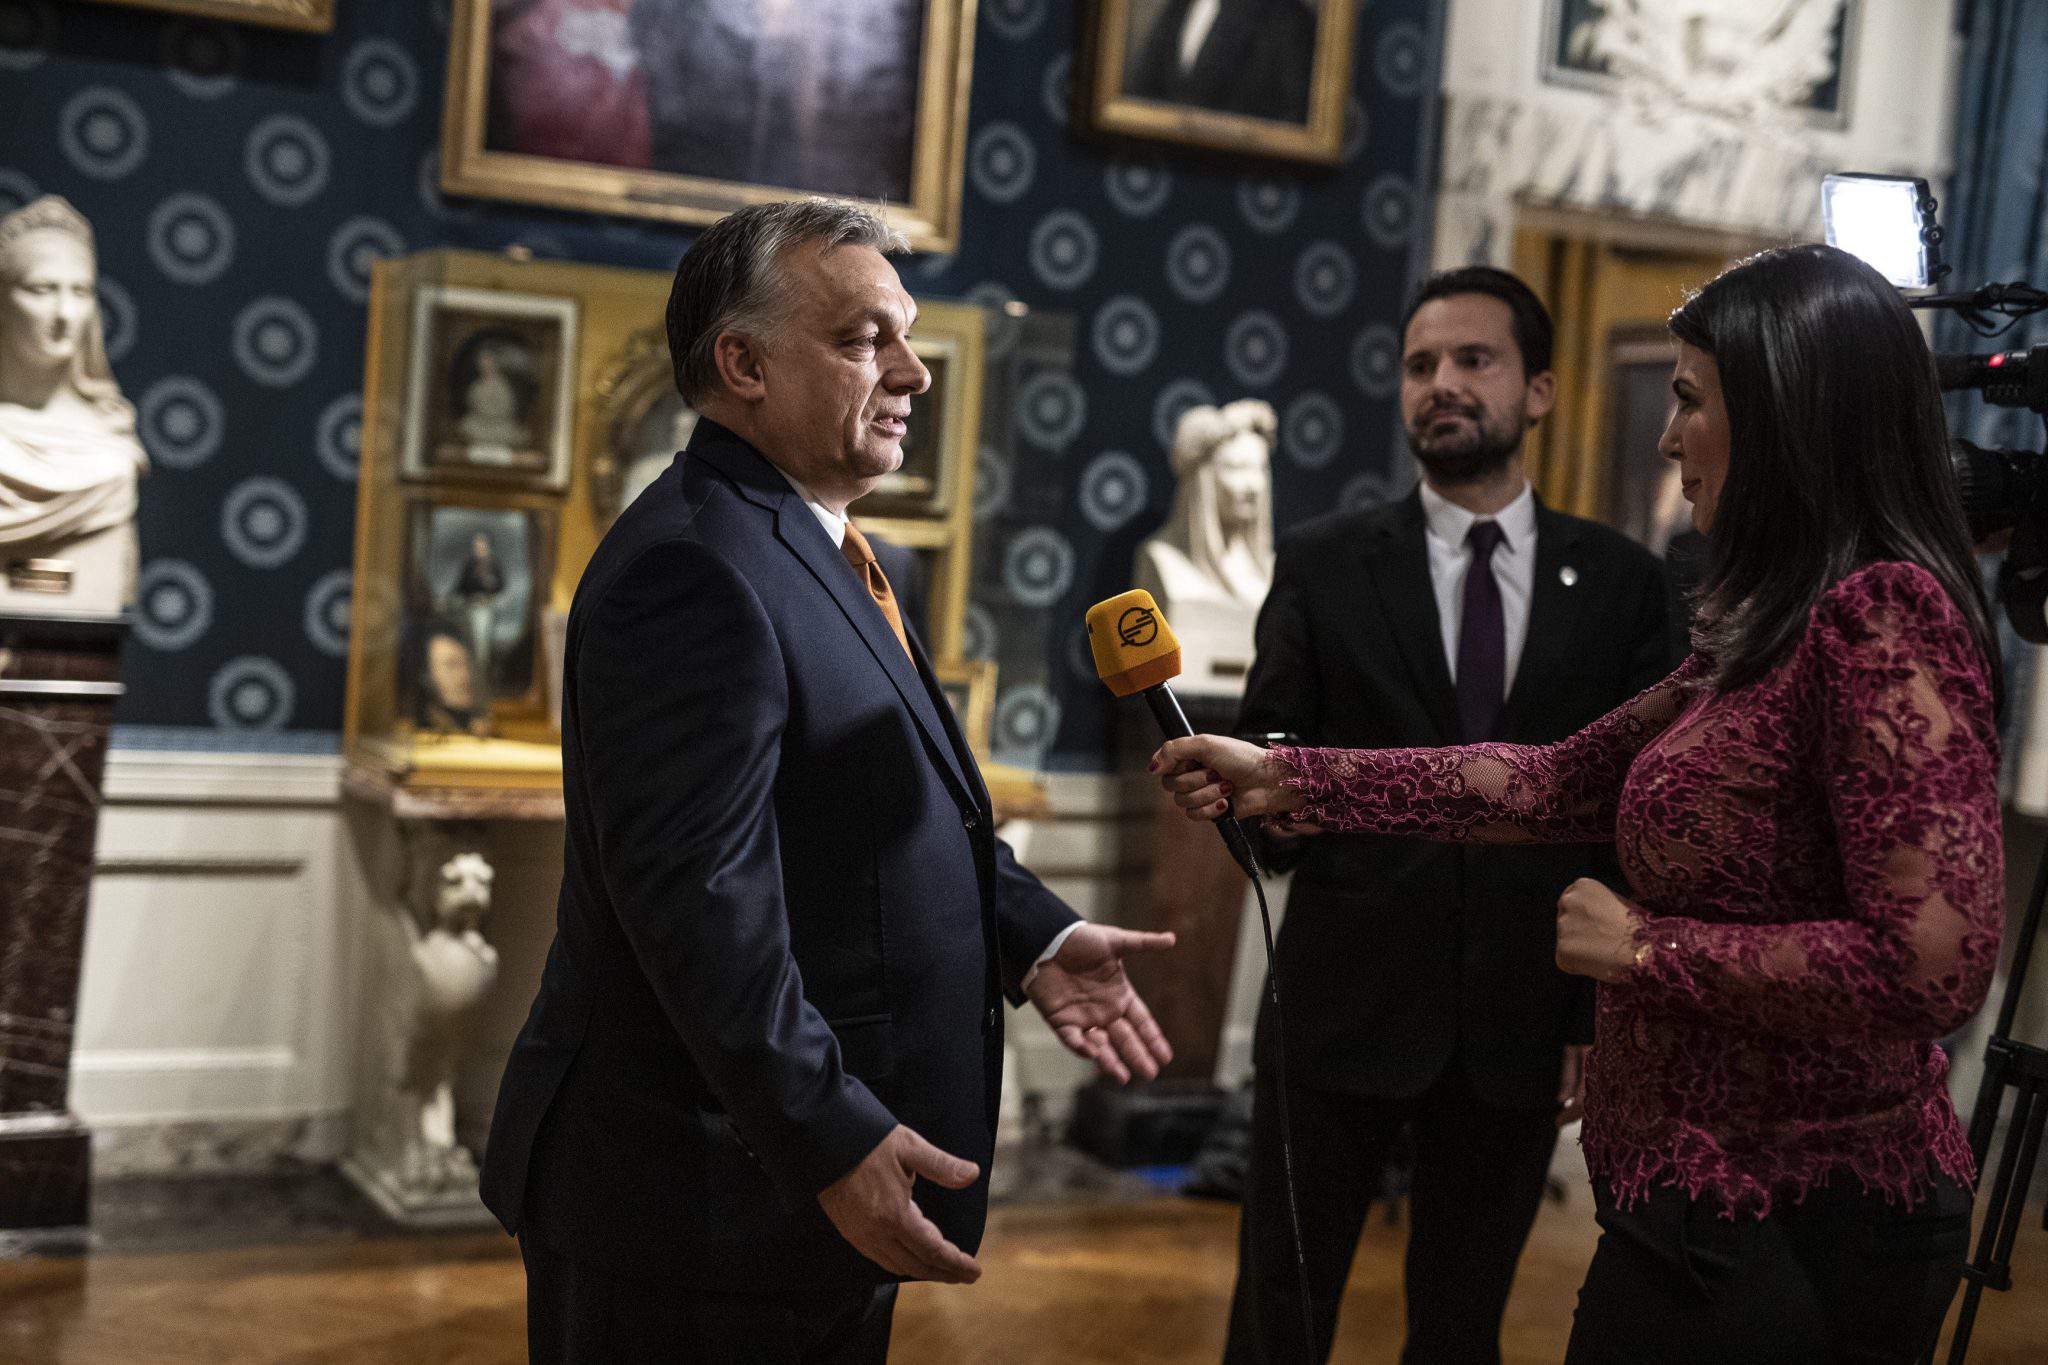 Orbán interview